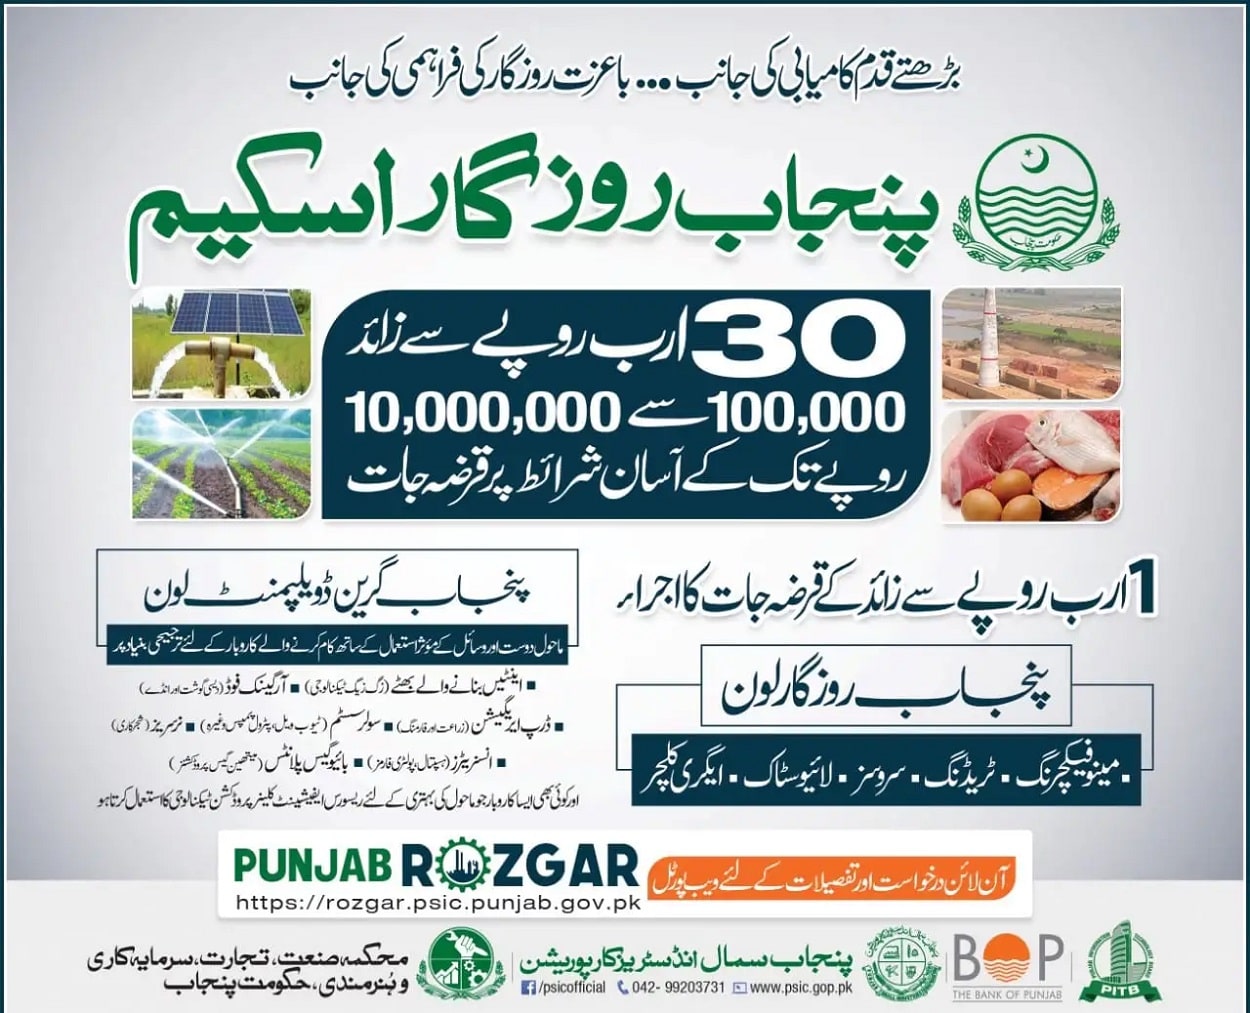 Punjab Rozgar Scheme/Program 2022